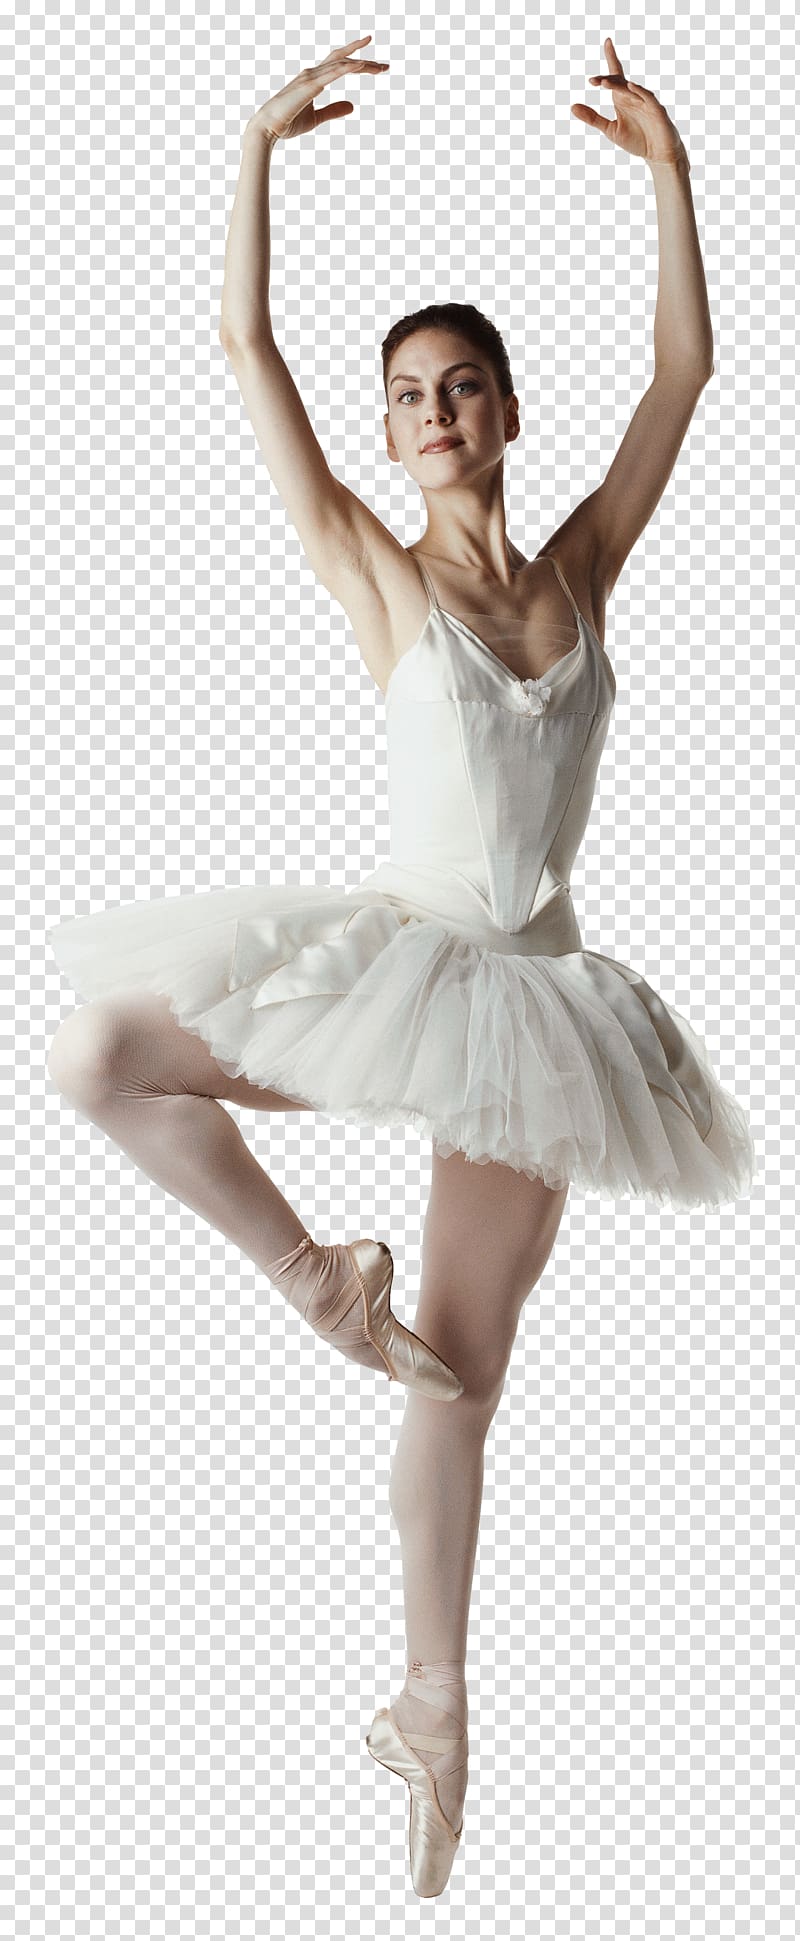 Misty Copeland Ballet Dancer Portable Network Graphics, ballet transparent background PNG clipart